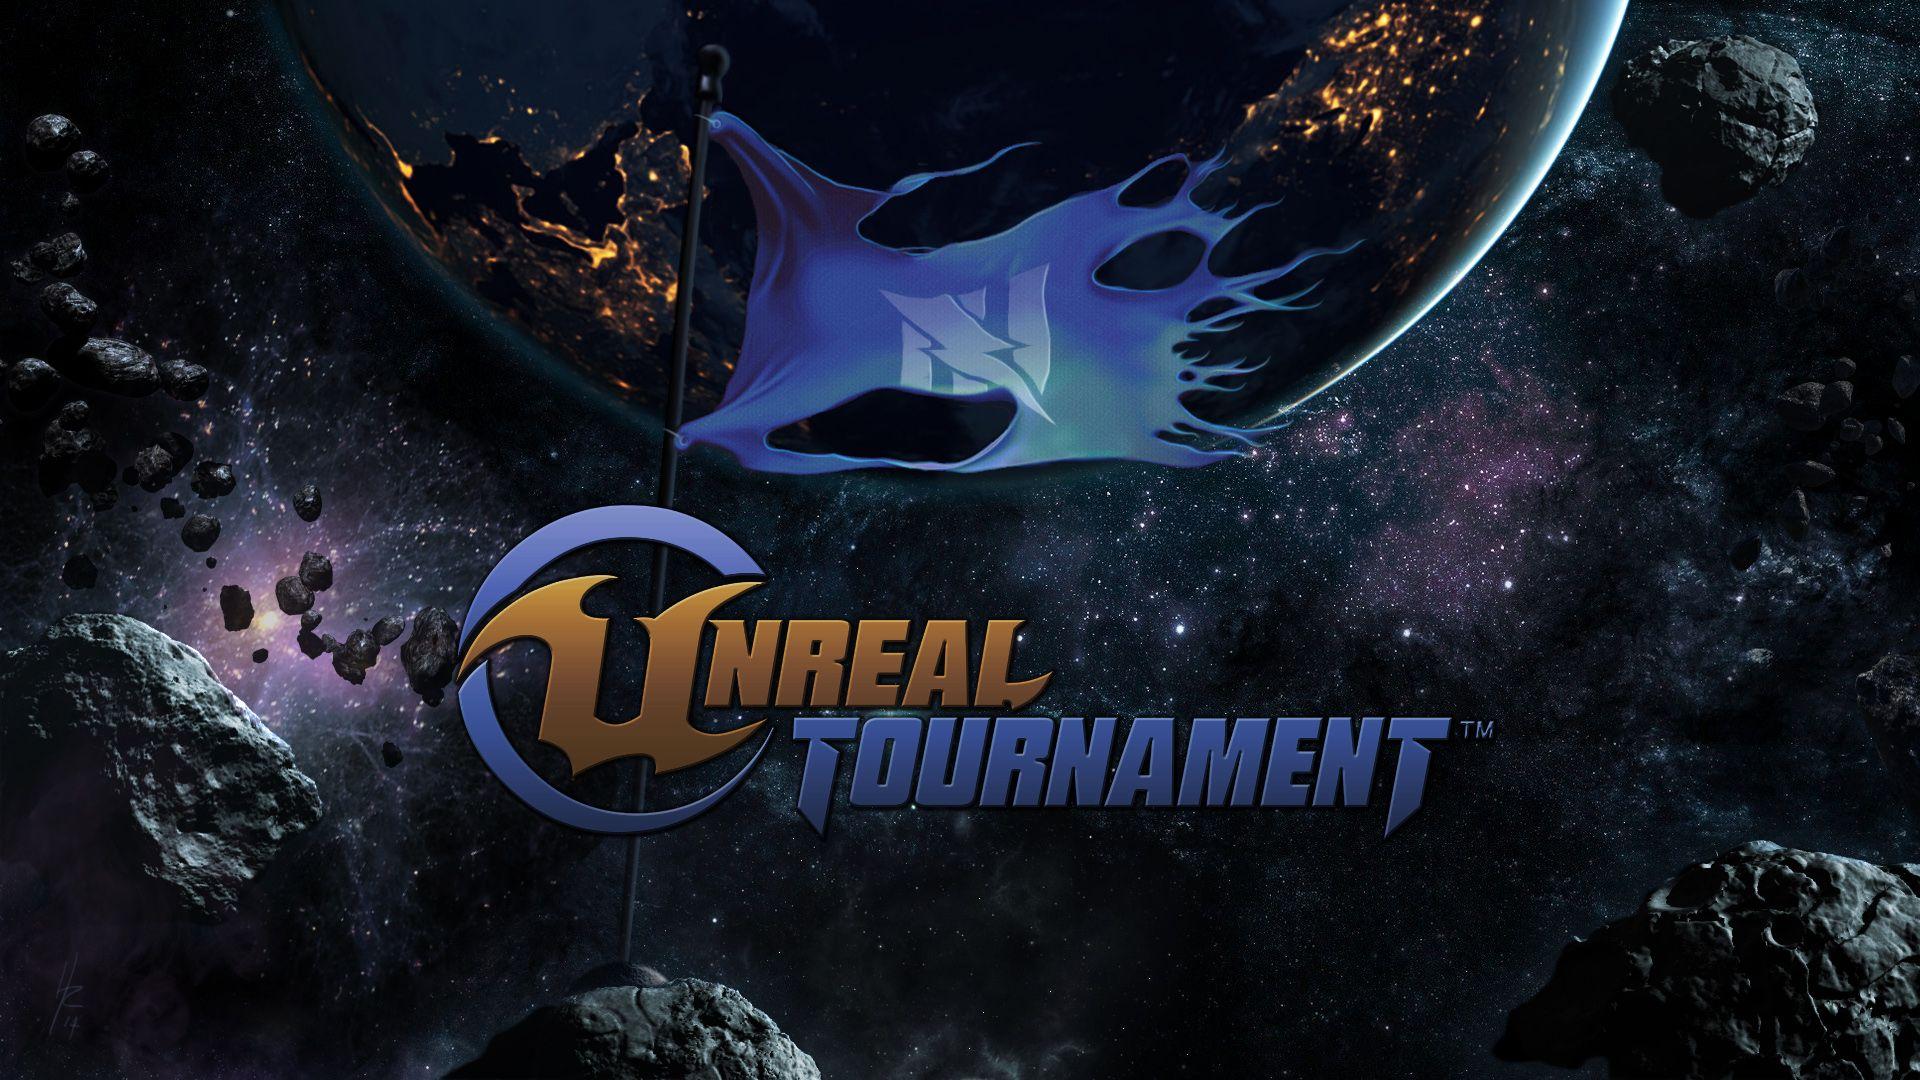 New official logo download & wallpaper Tournament Forums